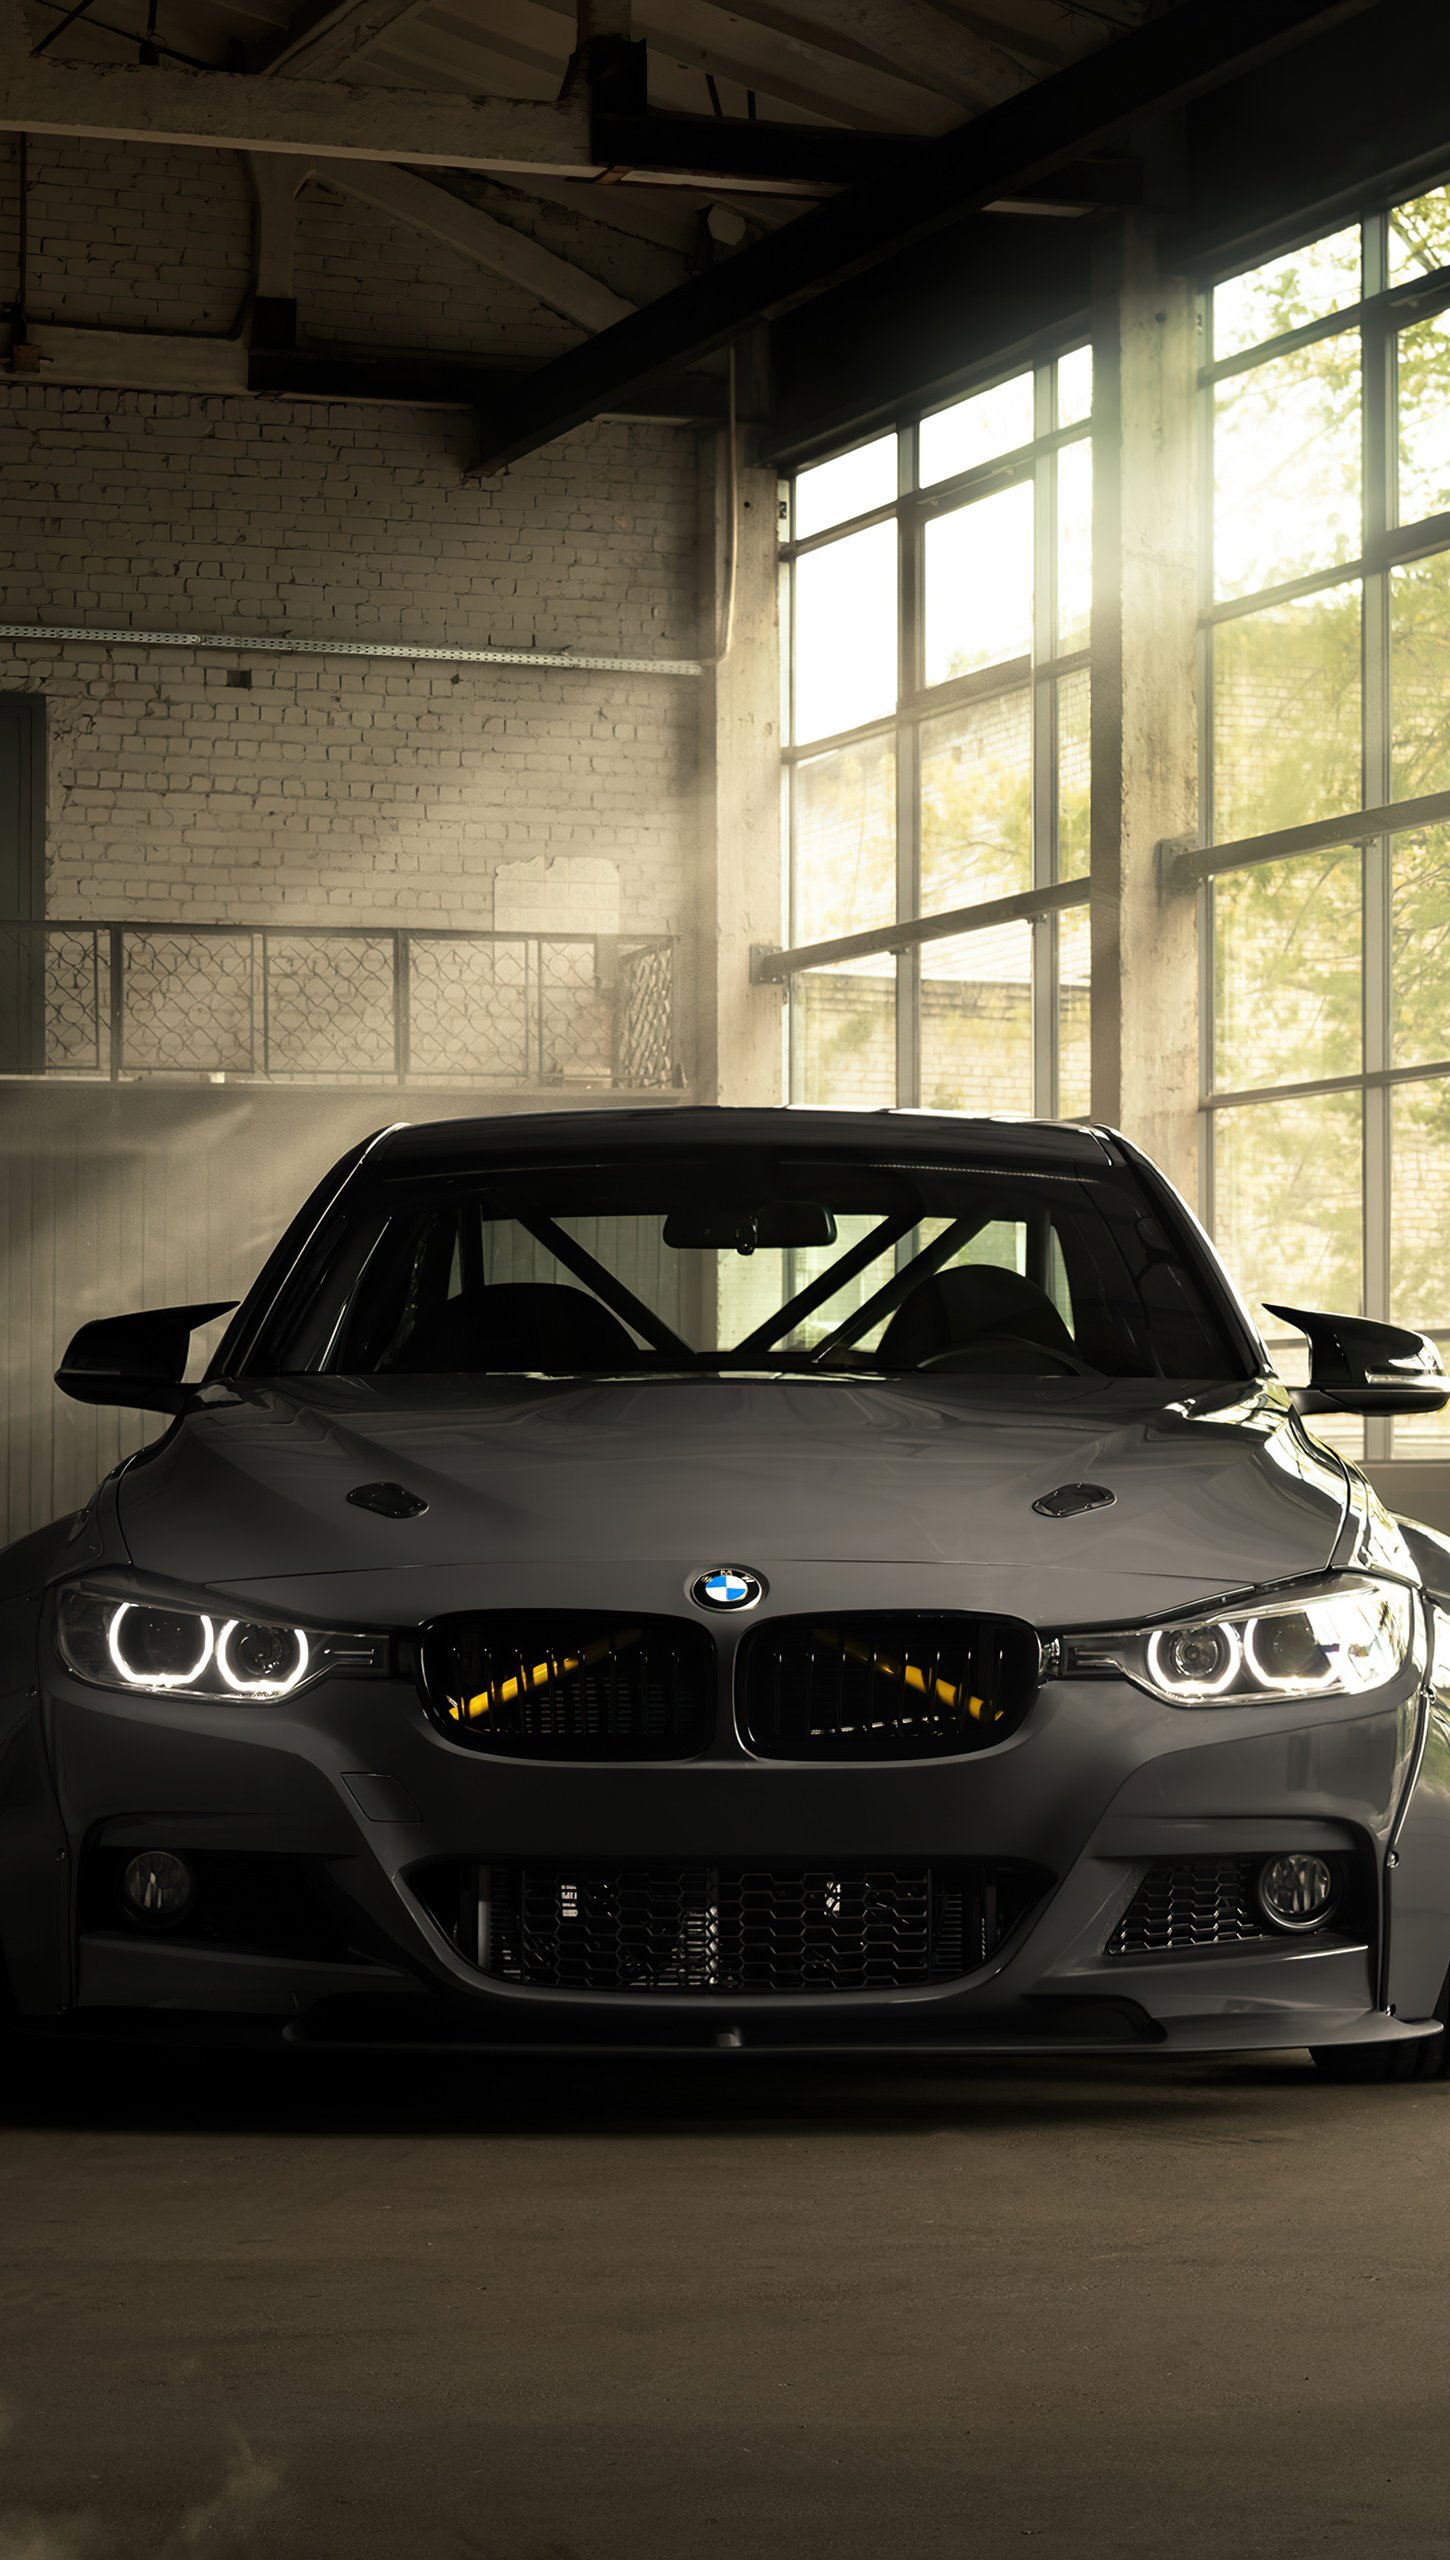 Fondos de pantalla BMW F30 widebody F30 Vertical